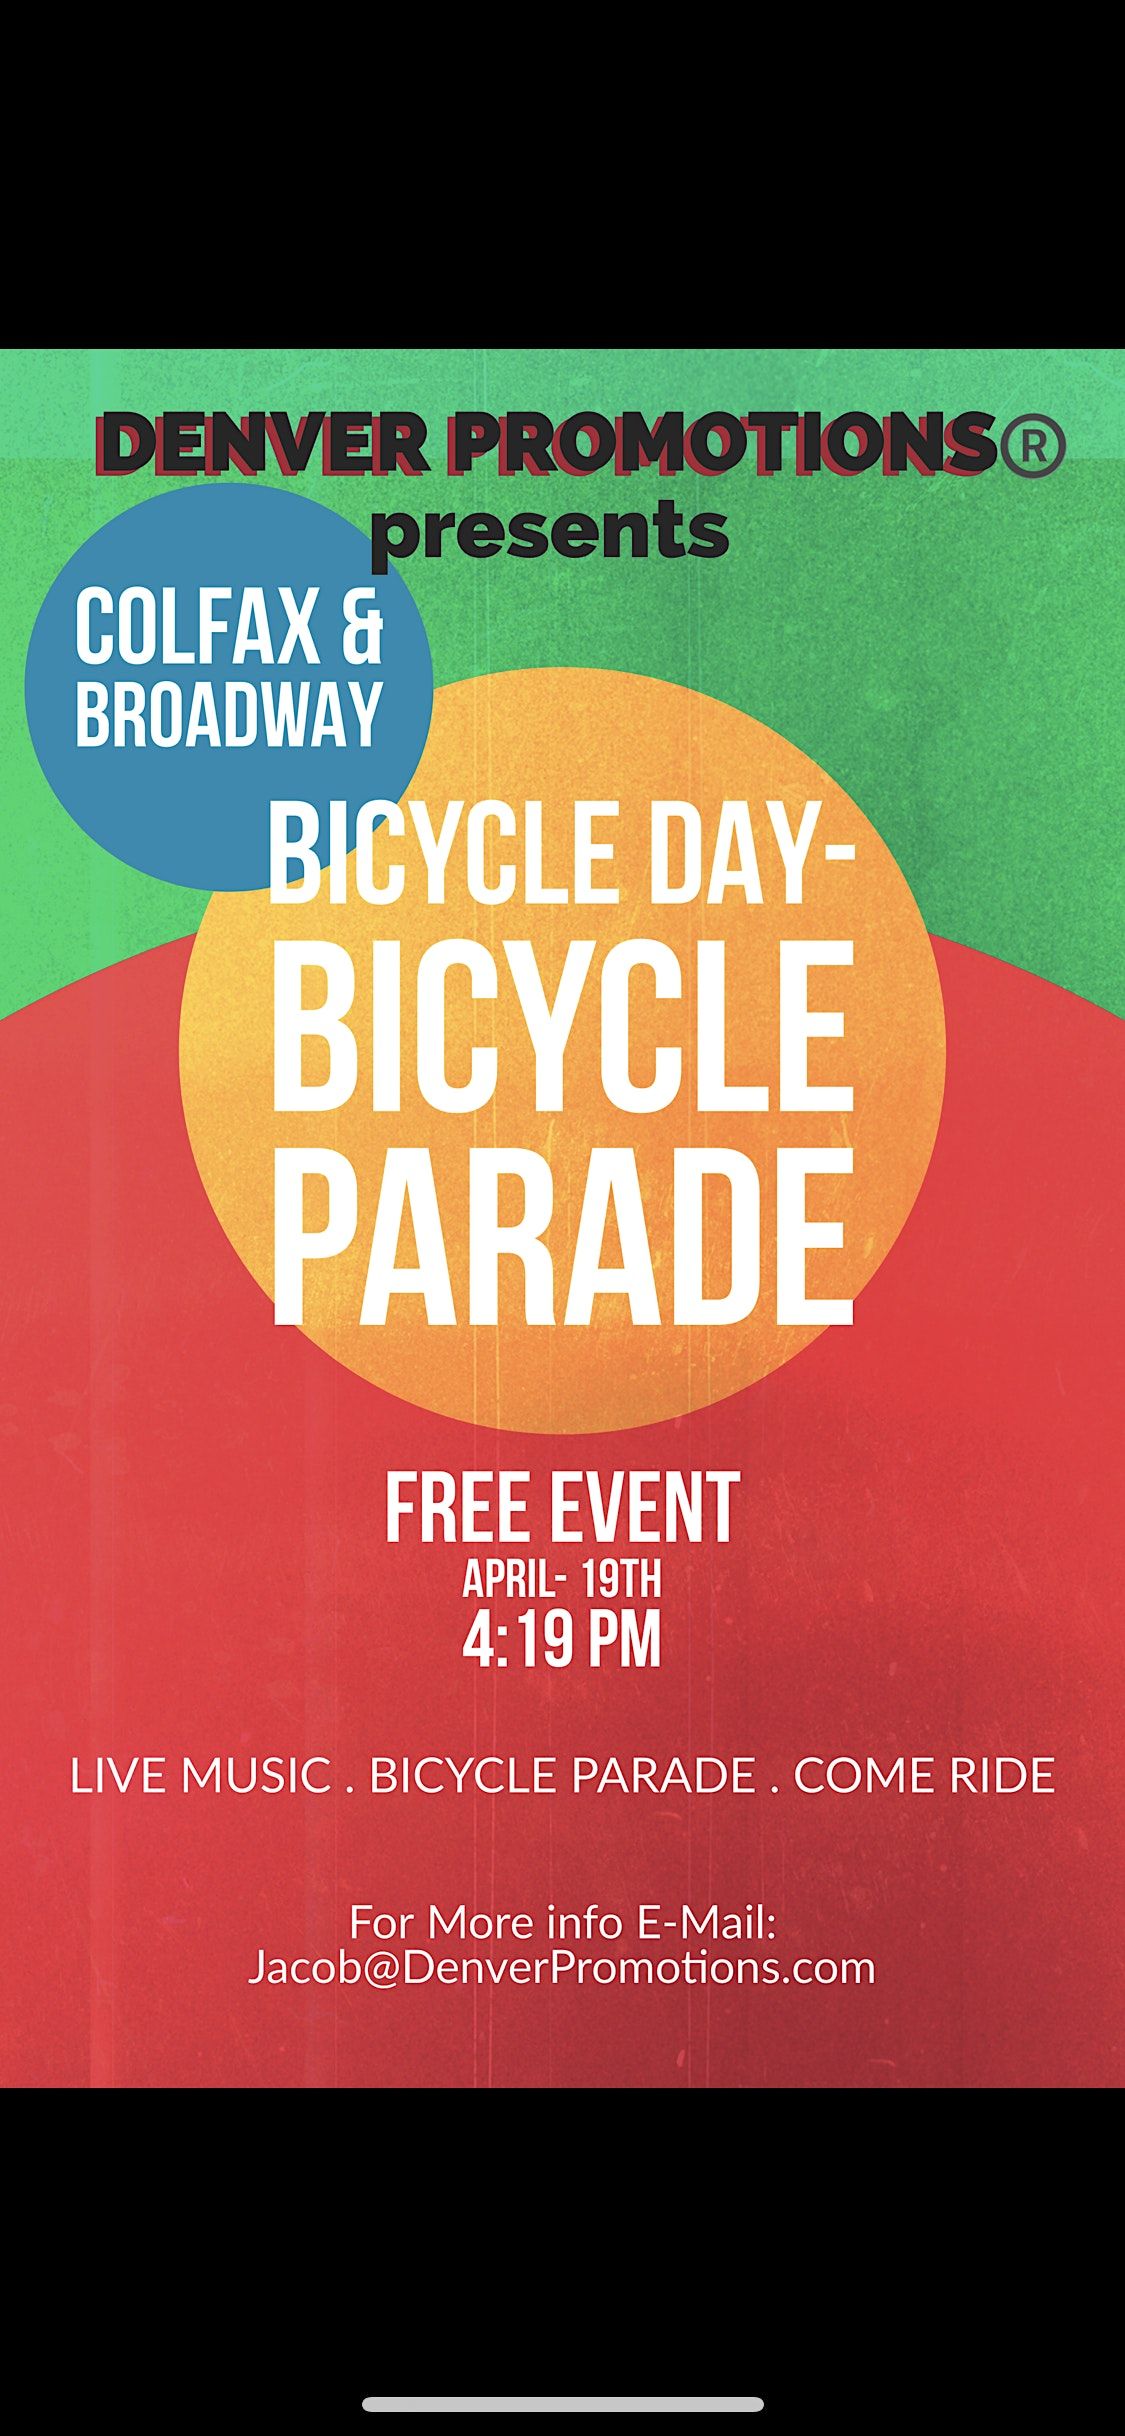 Bicycle Day - Bicycle Rave Parade